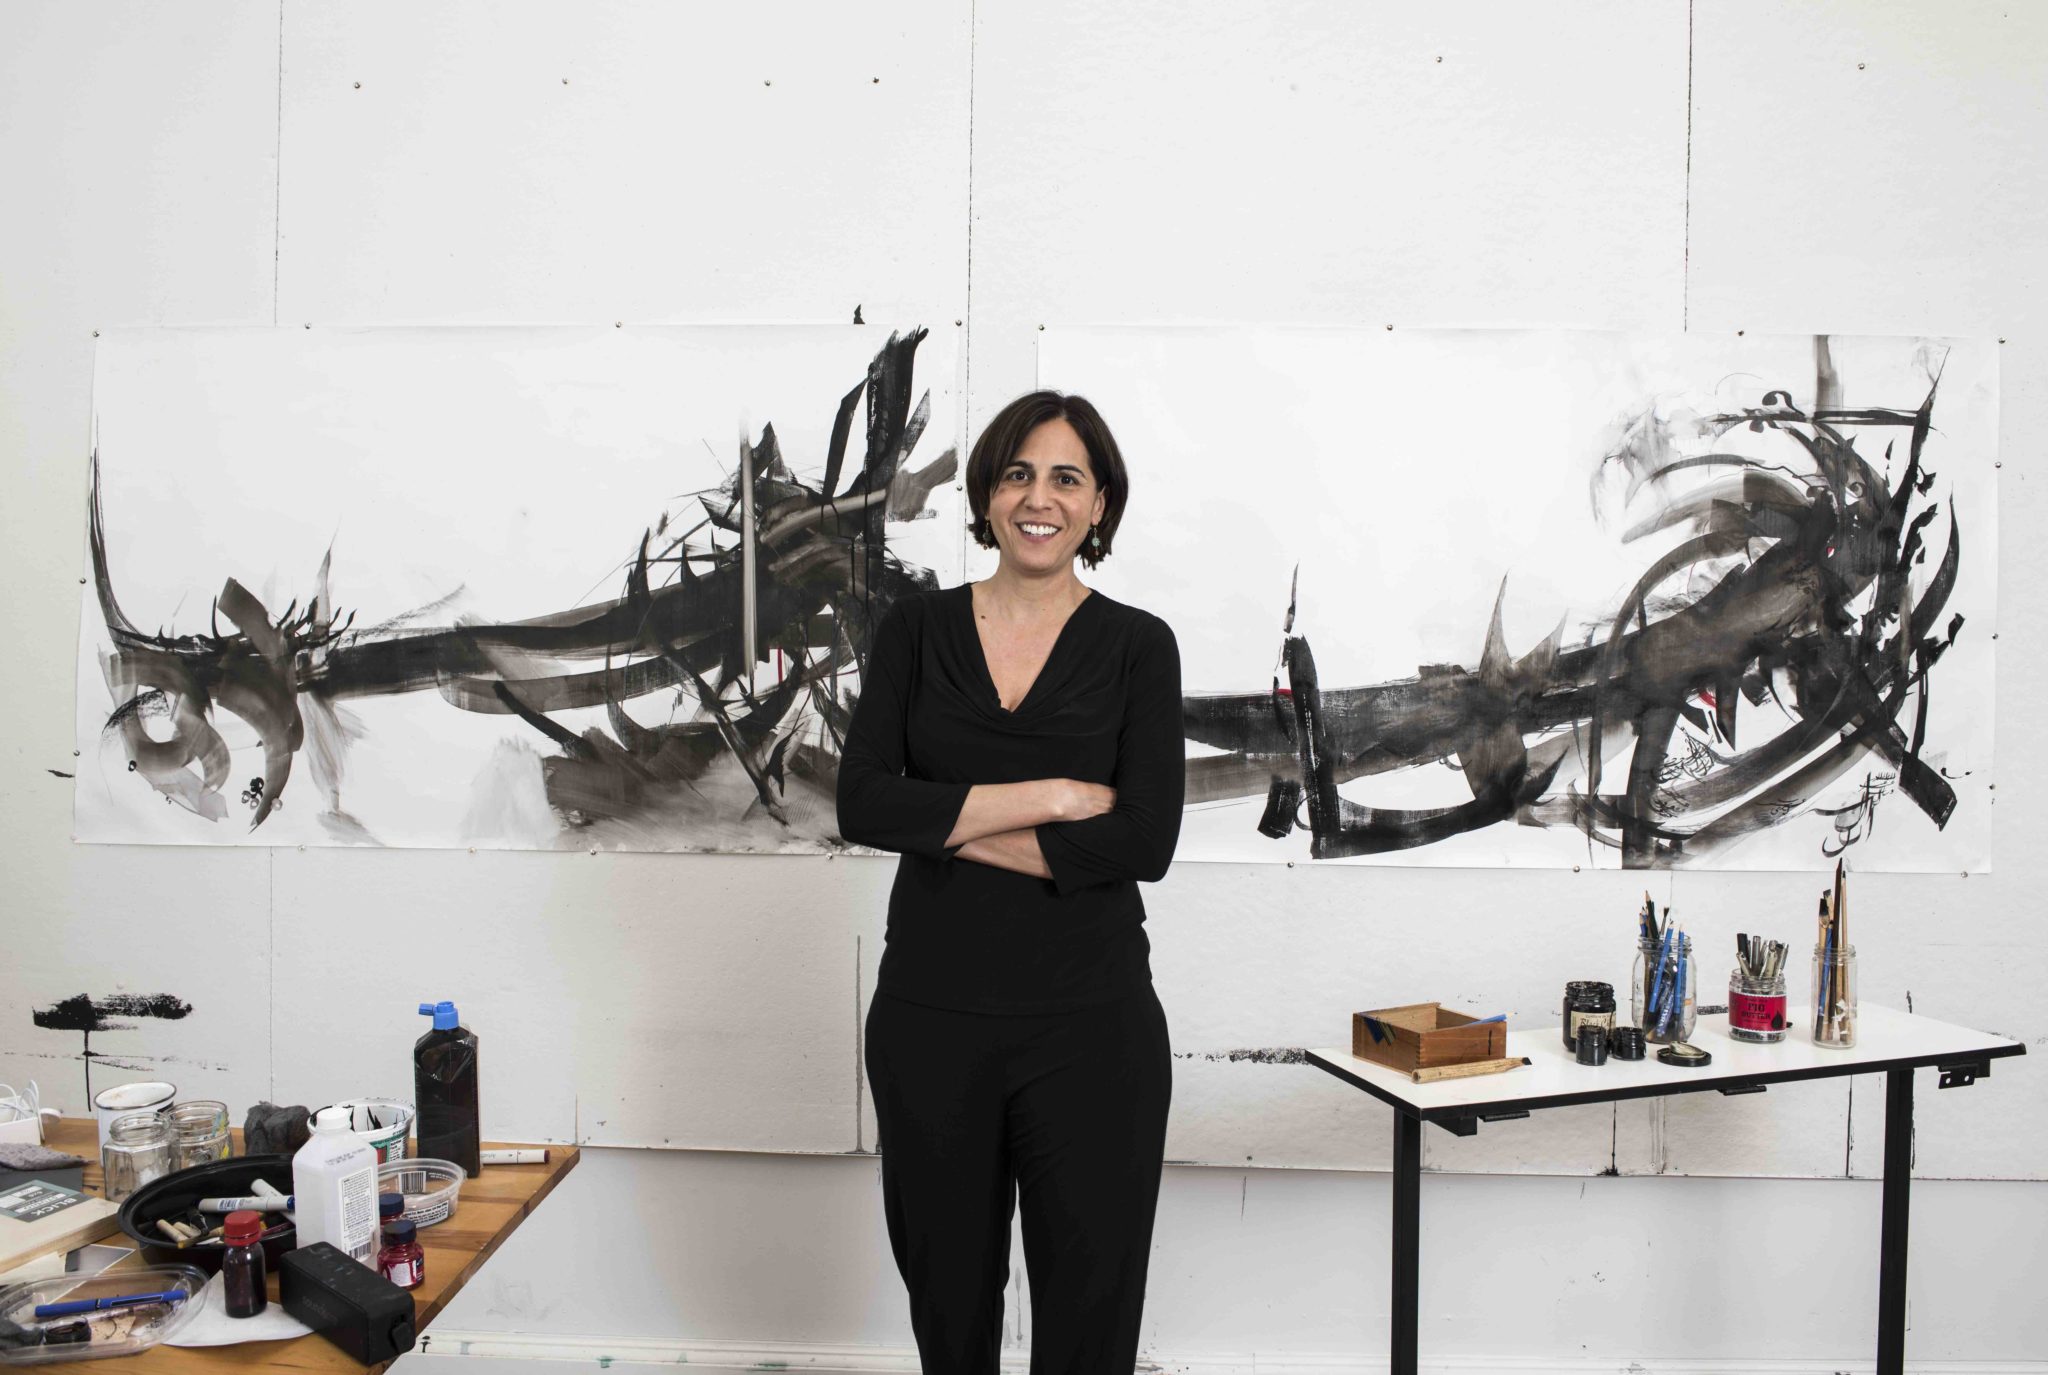 Dr. Moghbeli standing in front of her art.